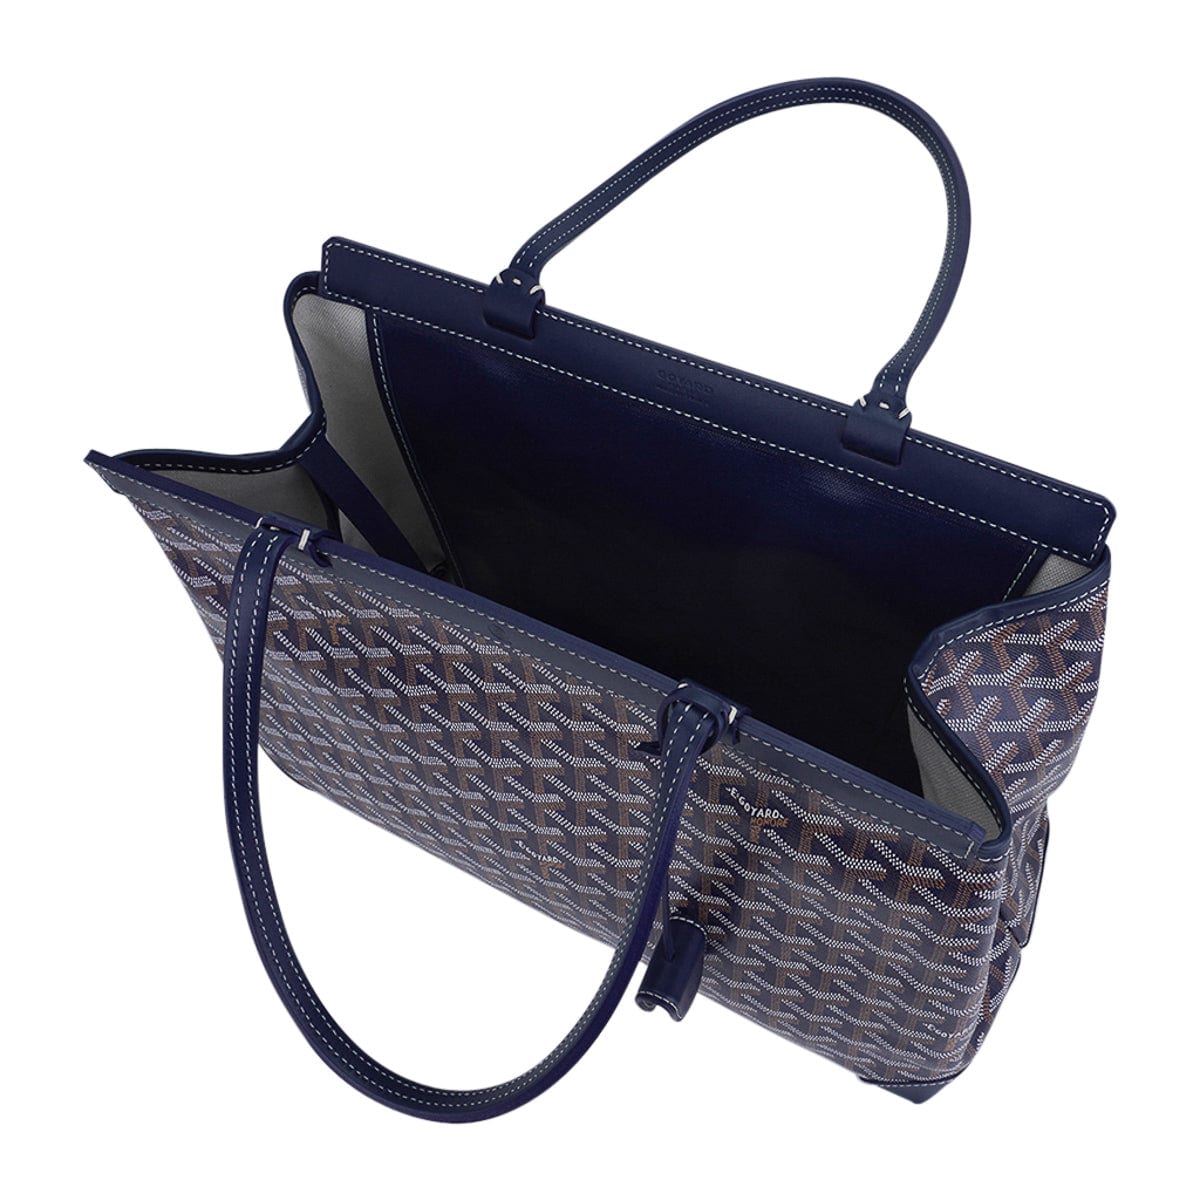 Goyard, Bags, Authentic Goyard Bellechasse Pm Handbag